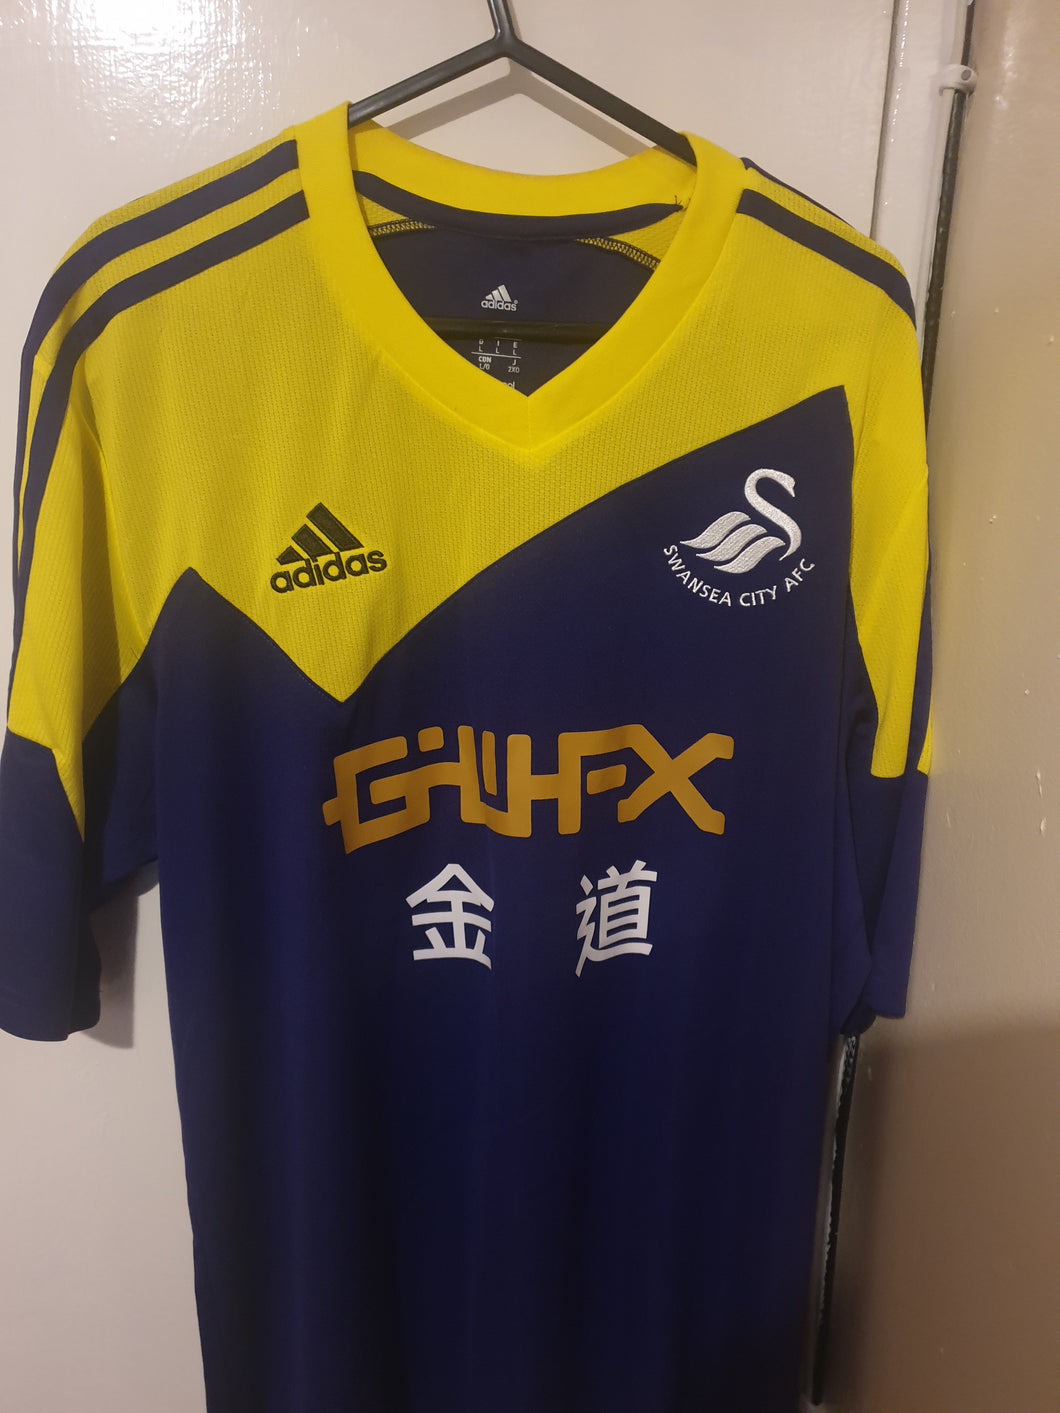 Swansea City 2013-14 Away Shirt (Size Large)